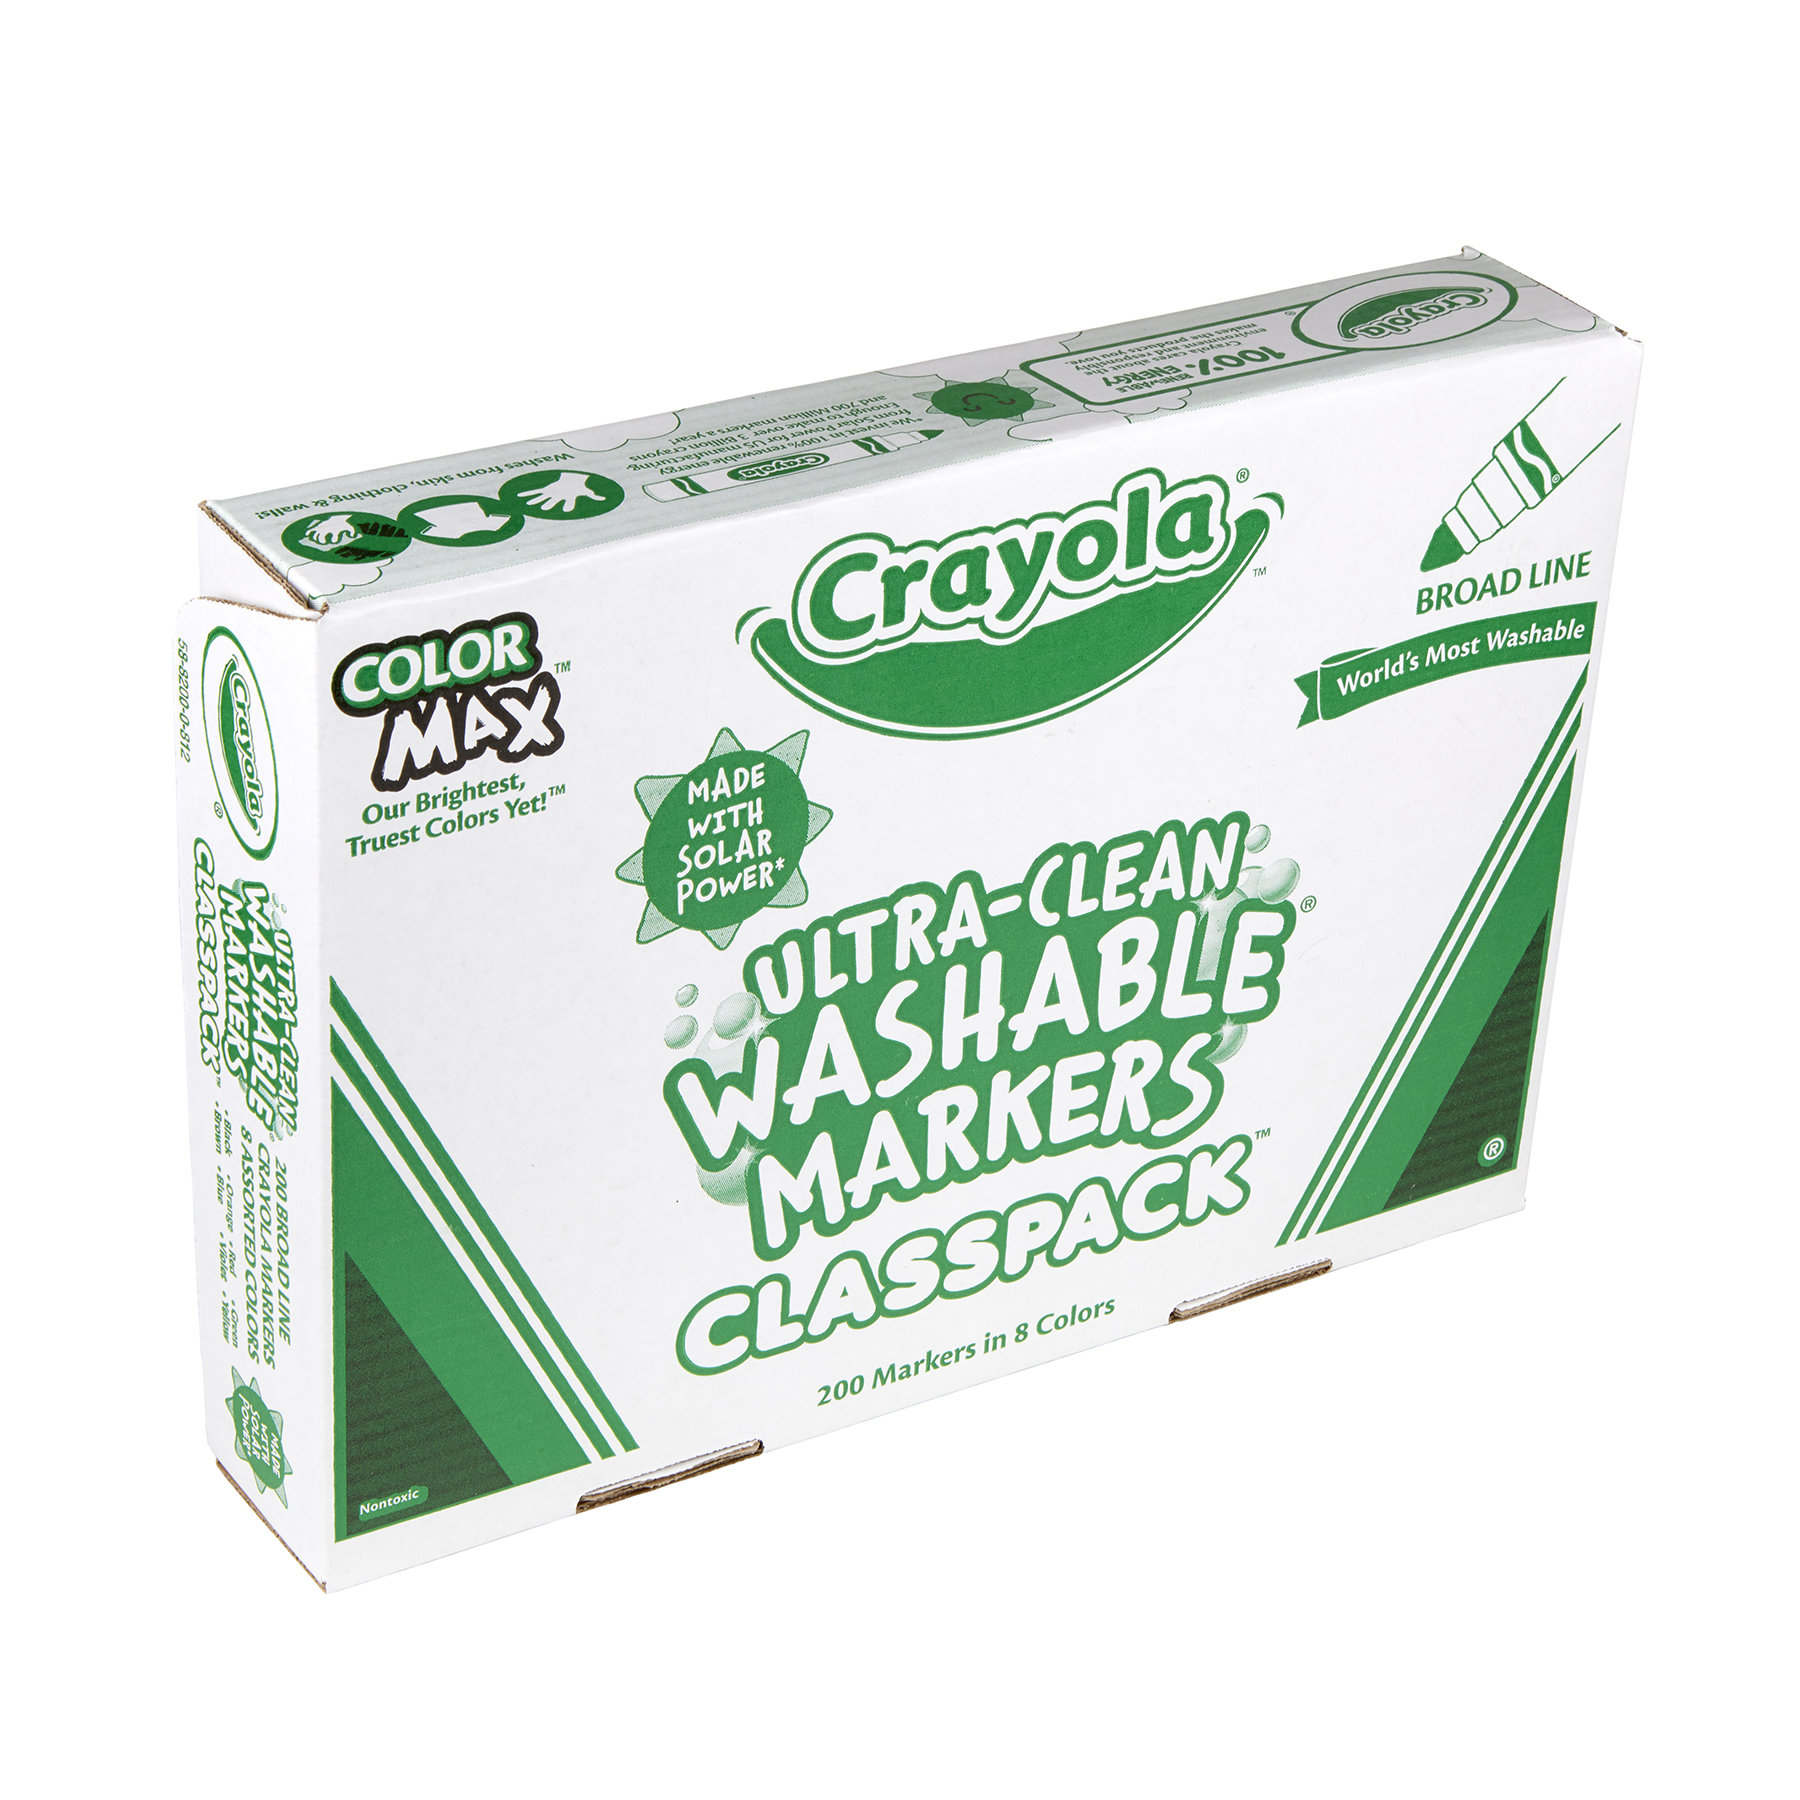 Crayola Crayons, Ultra-Clean Washable, ColorMax, Large - 8 crayons